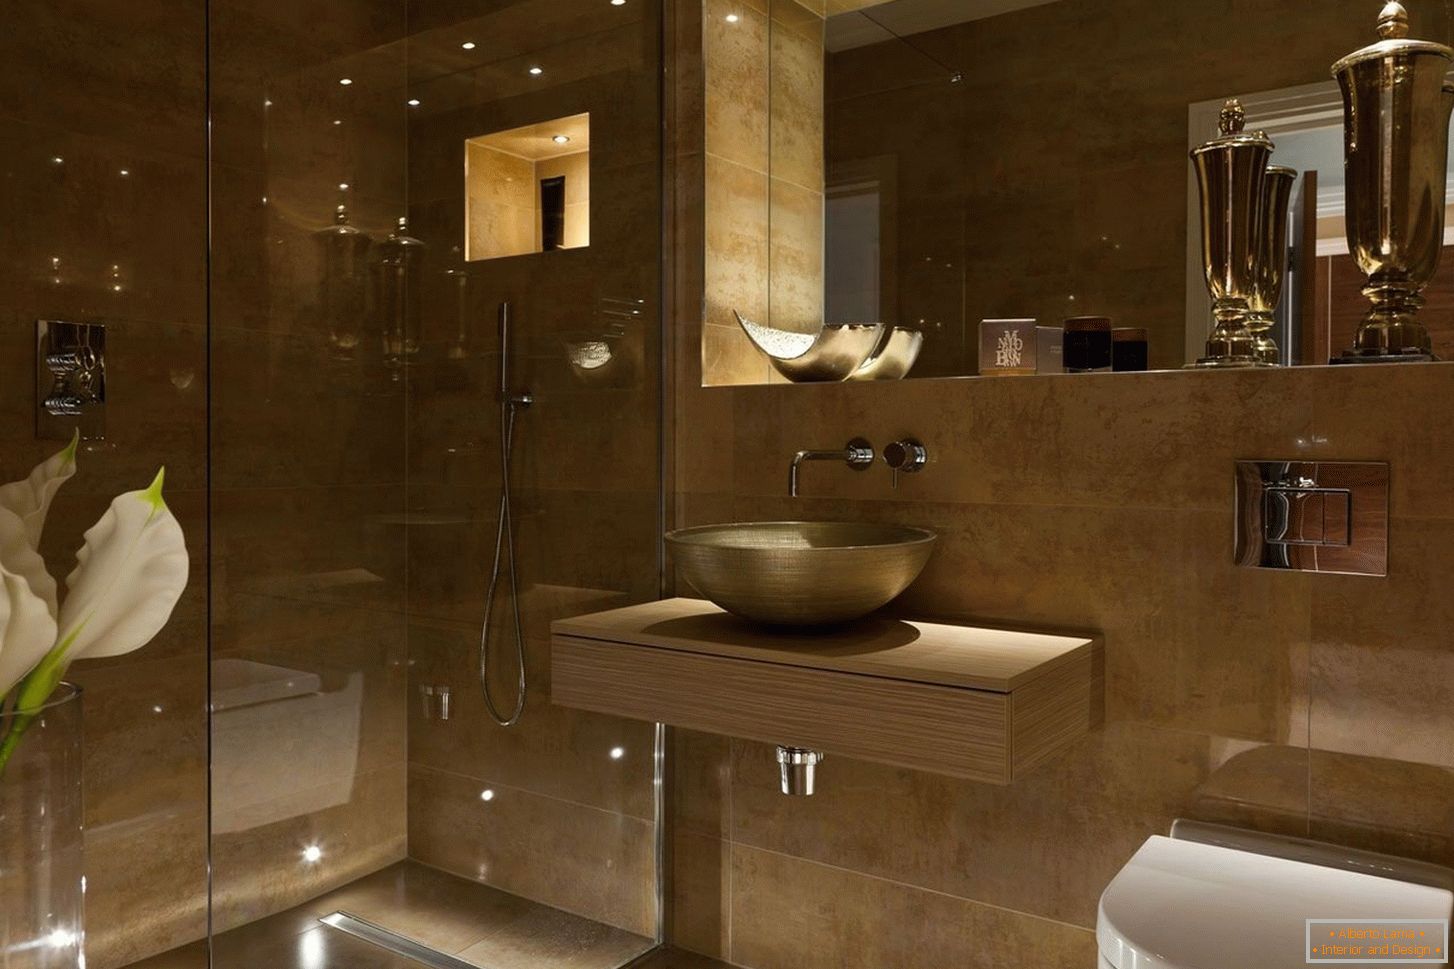 Luxurious bathroom interior